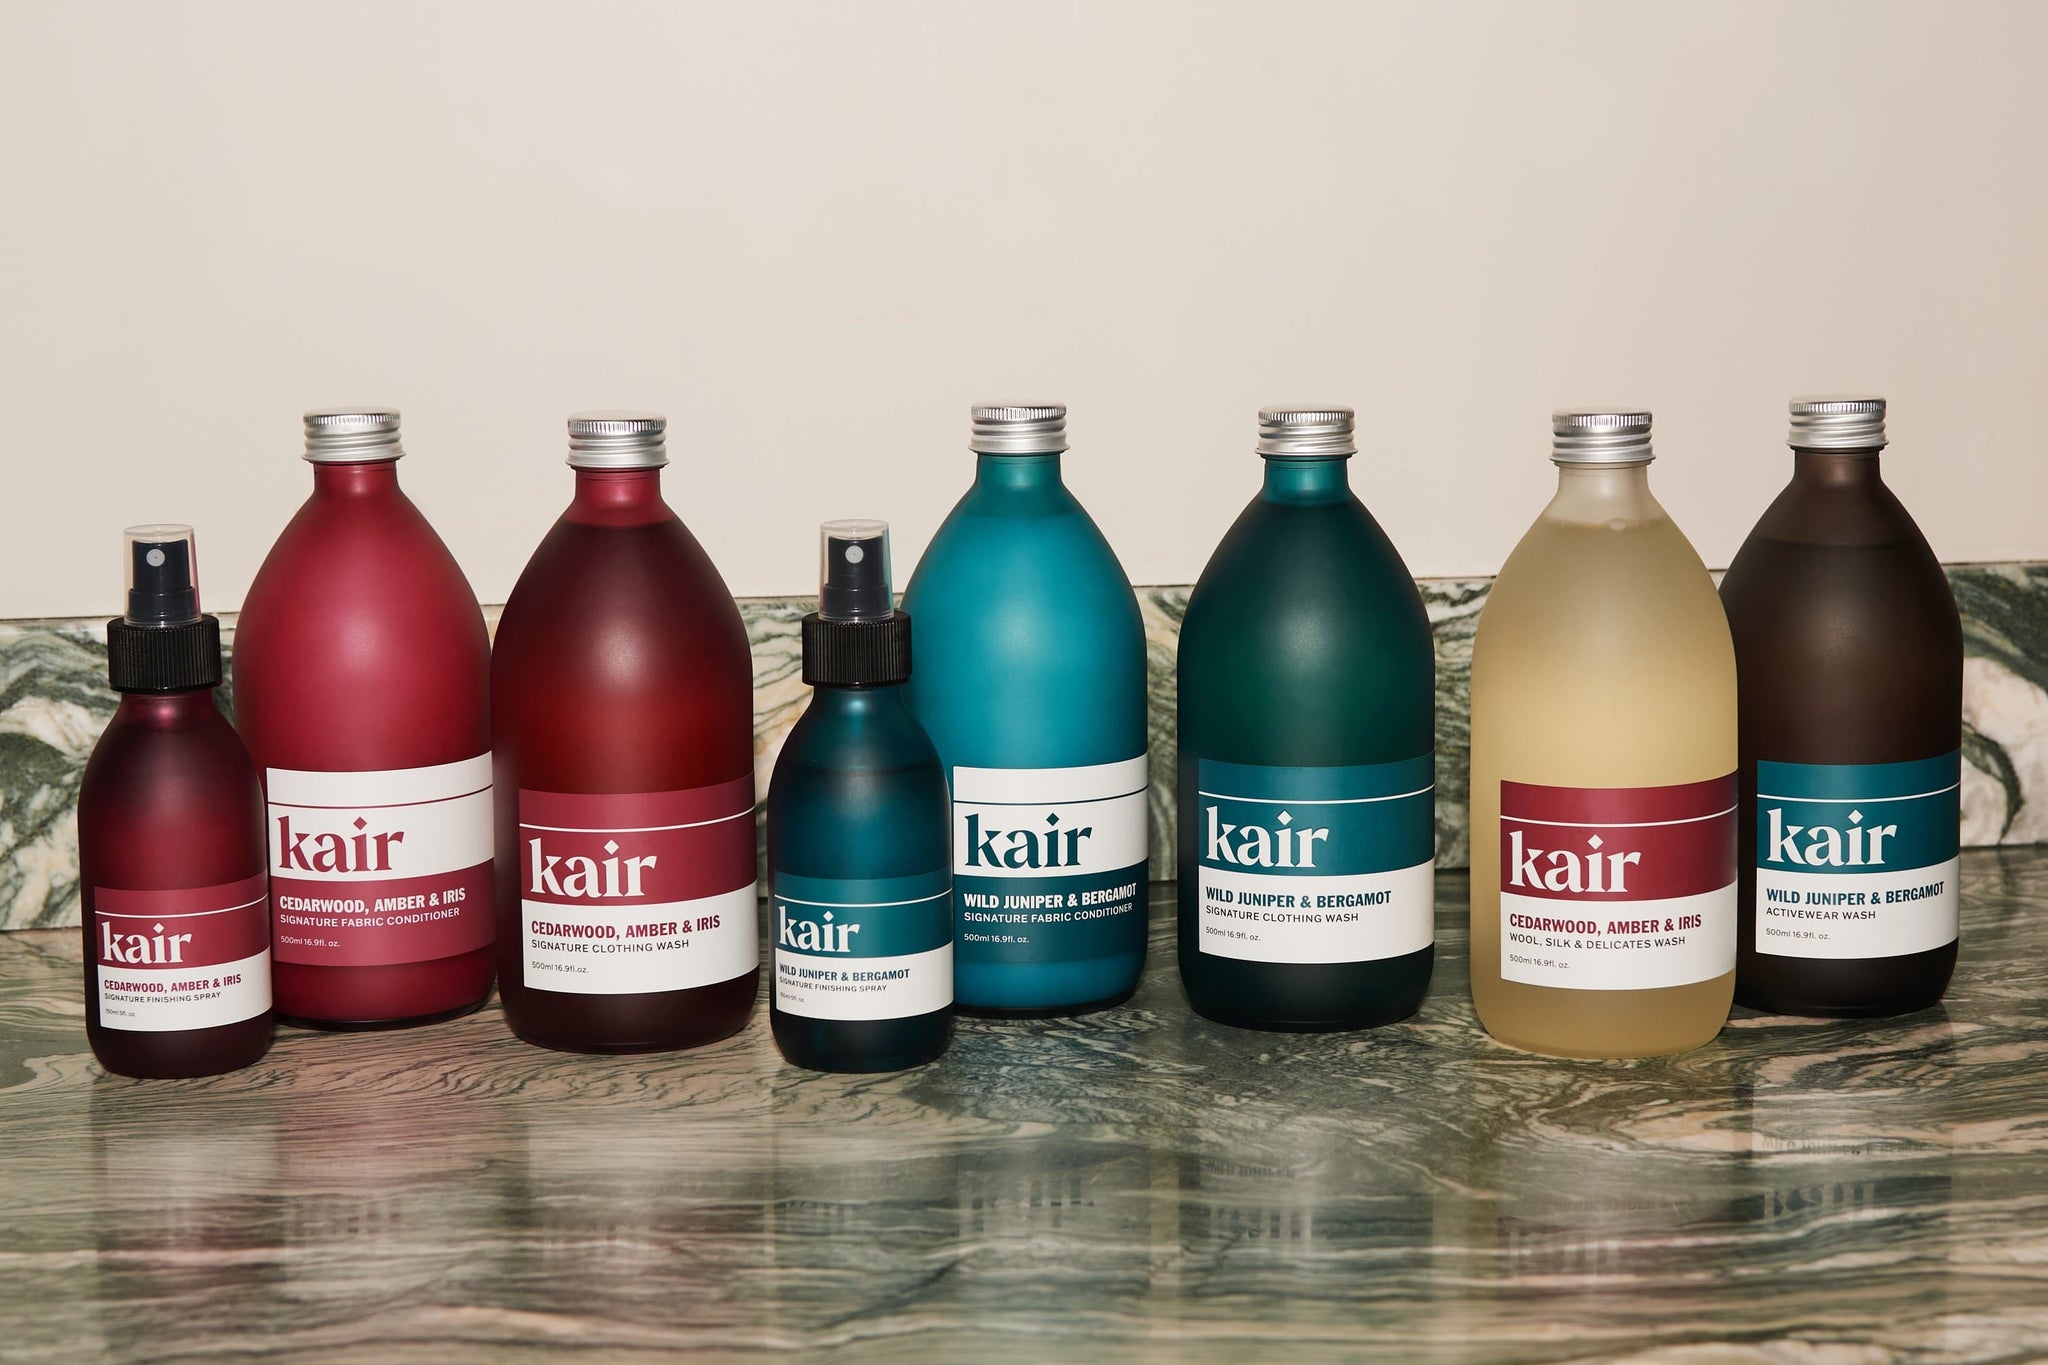 Full Range of Kair Signature Clothing Wash, Fabric Conditioner and Finishing Sprays in Wild Juniper & Bergamot and Cedarwood, Amber & Iris scents